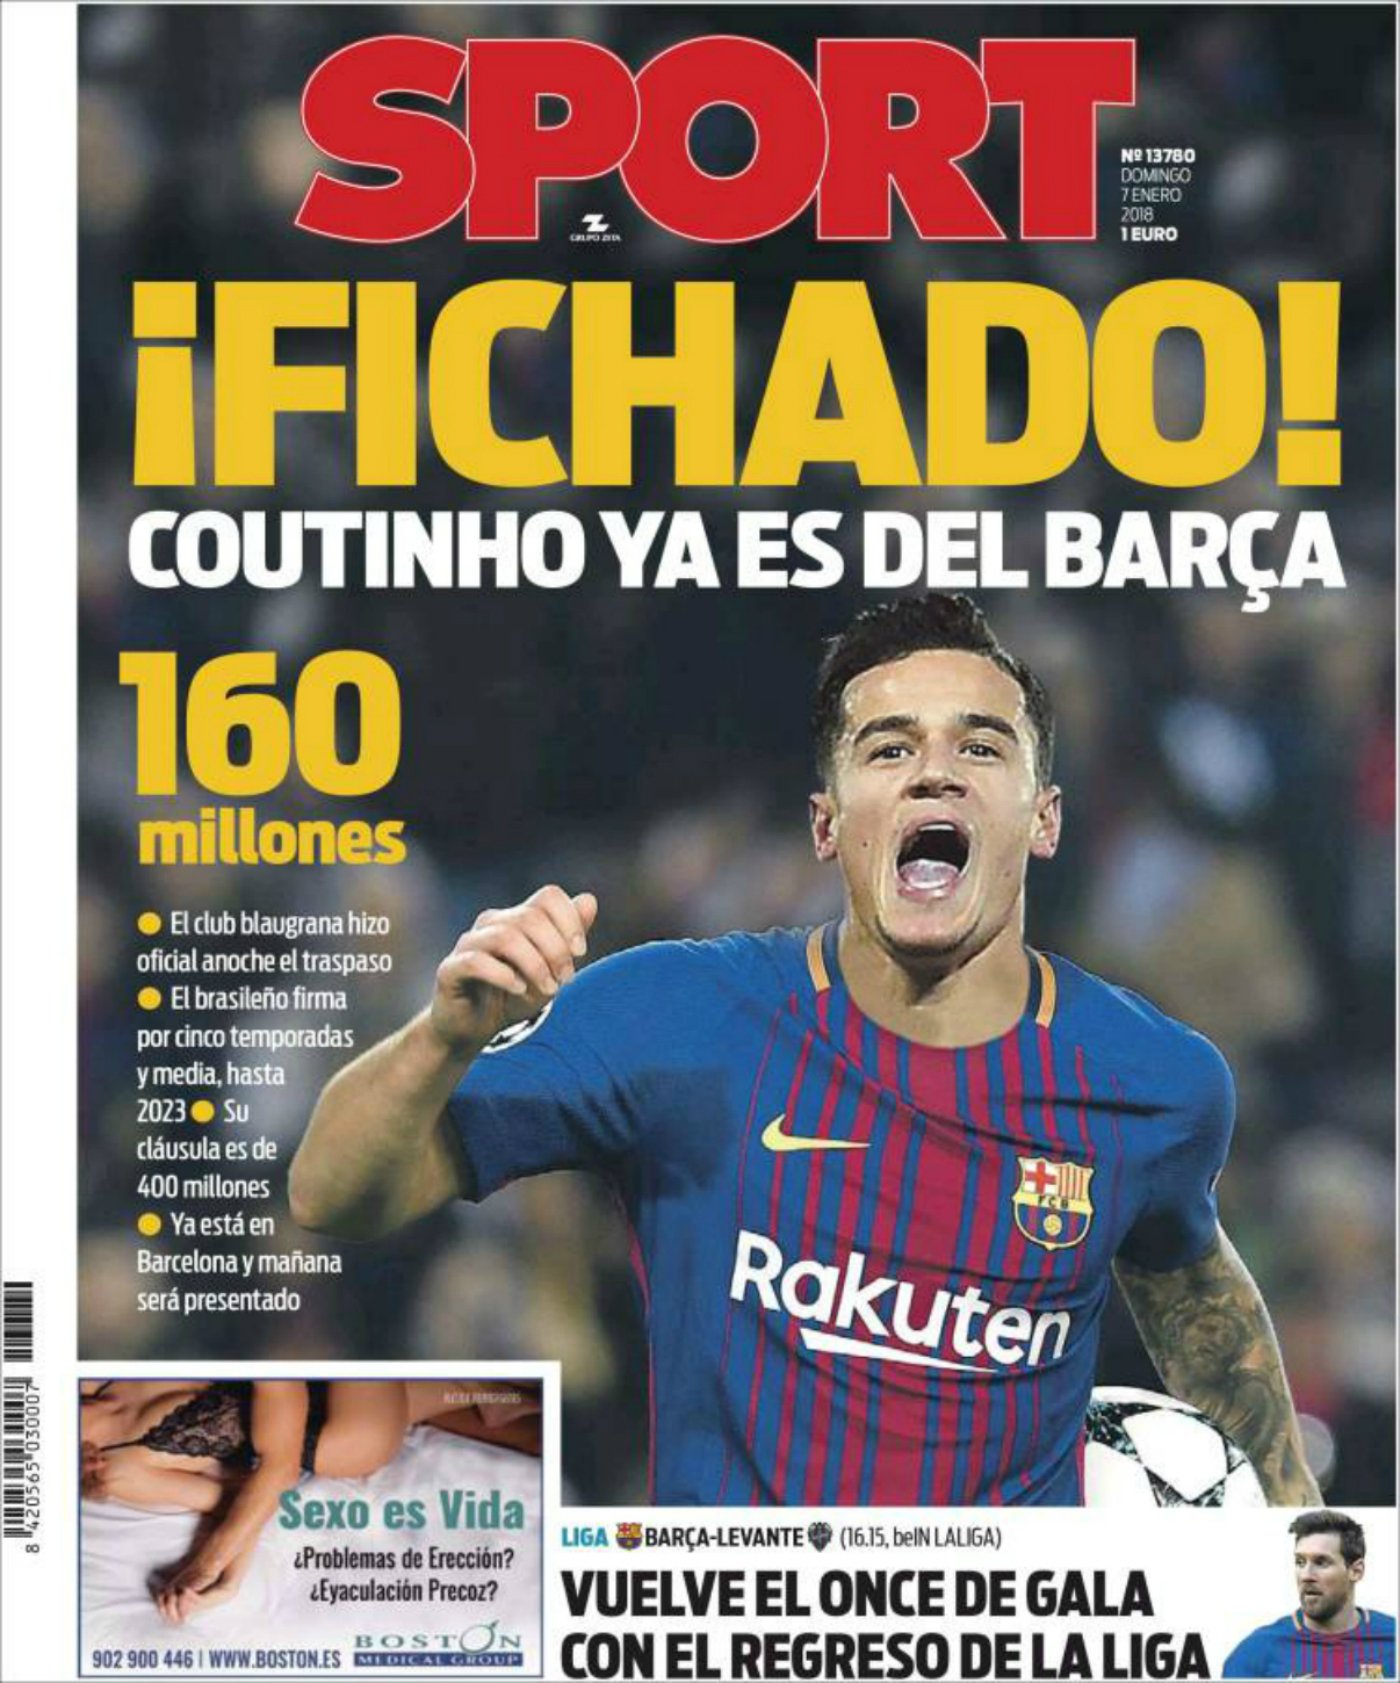 La prensa reacciona a la llegada de Coutinho: "Un fichaje de récord"